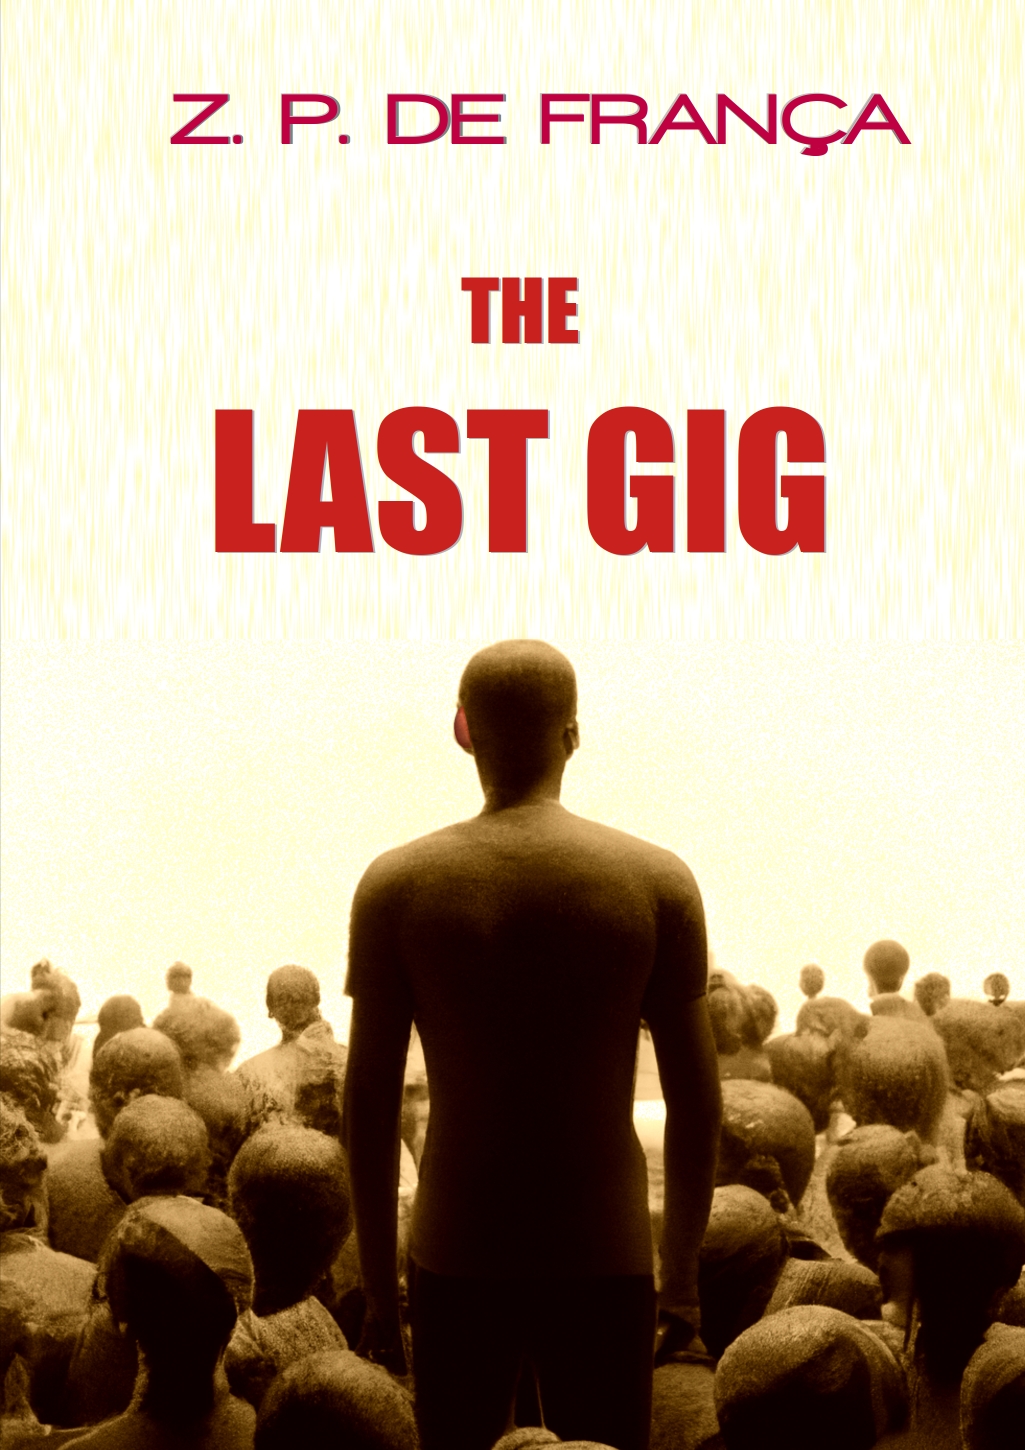 The Last Gig